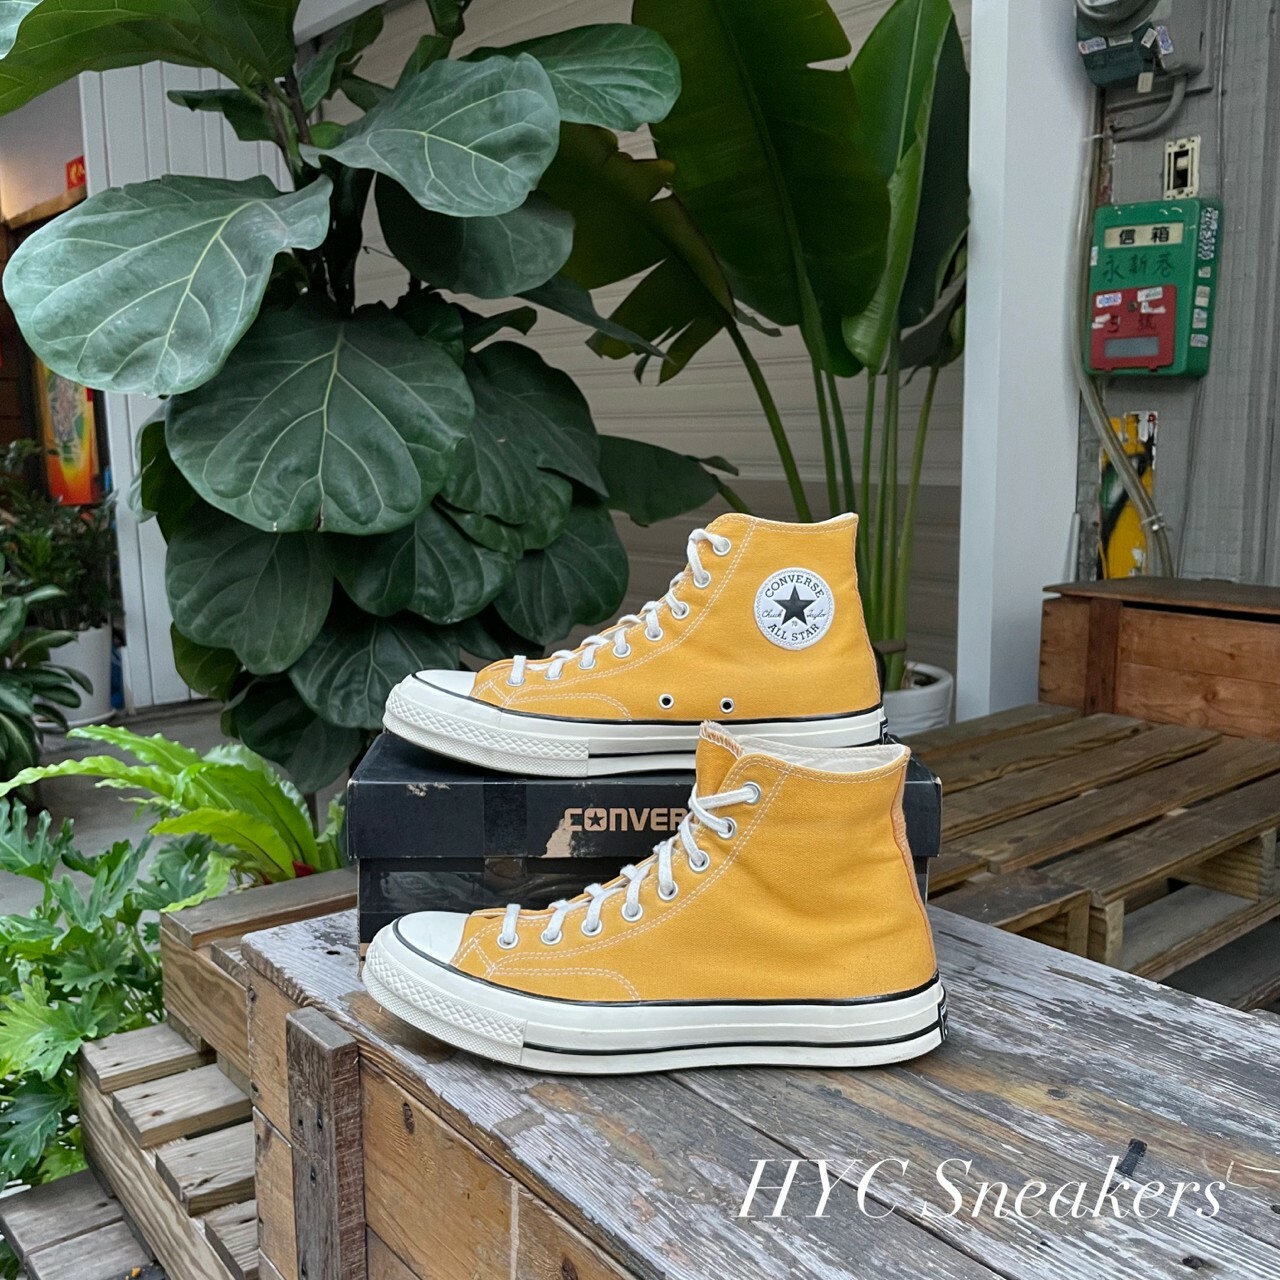 二手選物專區– HYC Sneakers Online Store